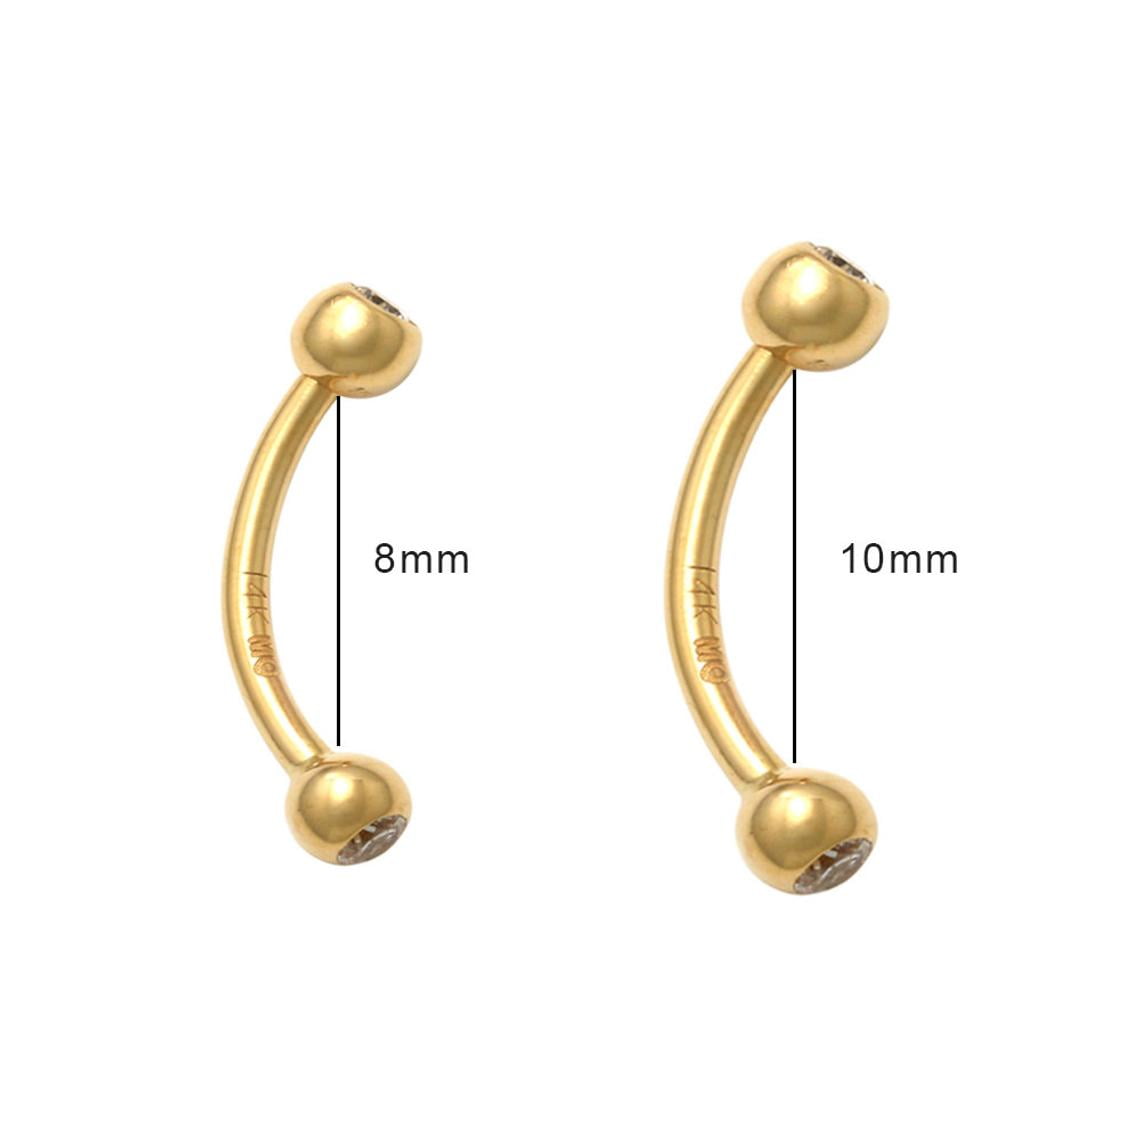 14K Solid GOLD Curved BENT Barbells Eyebrow Ear Belly Rook RINGS Stud Piercings